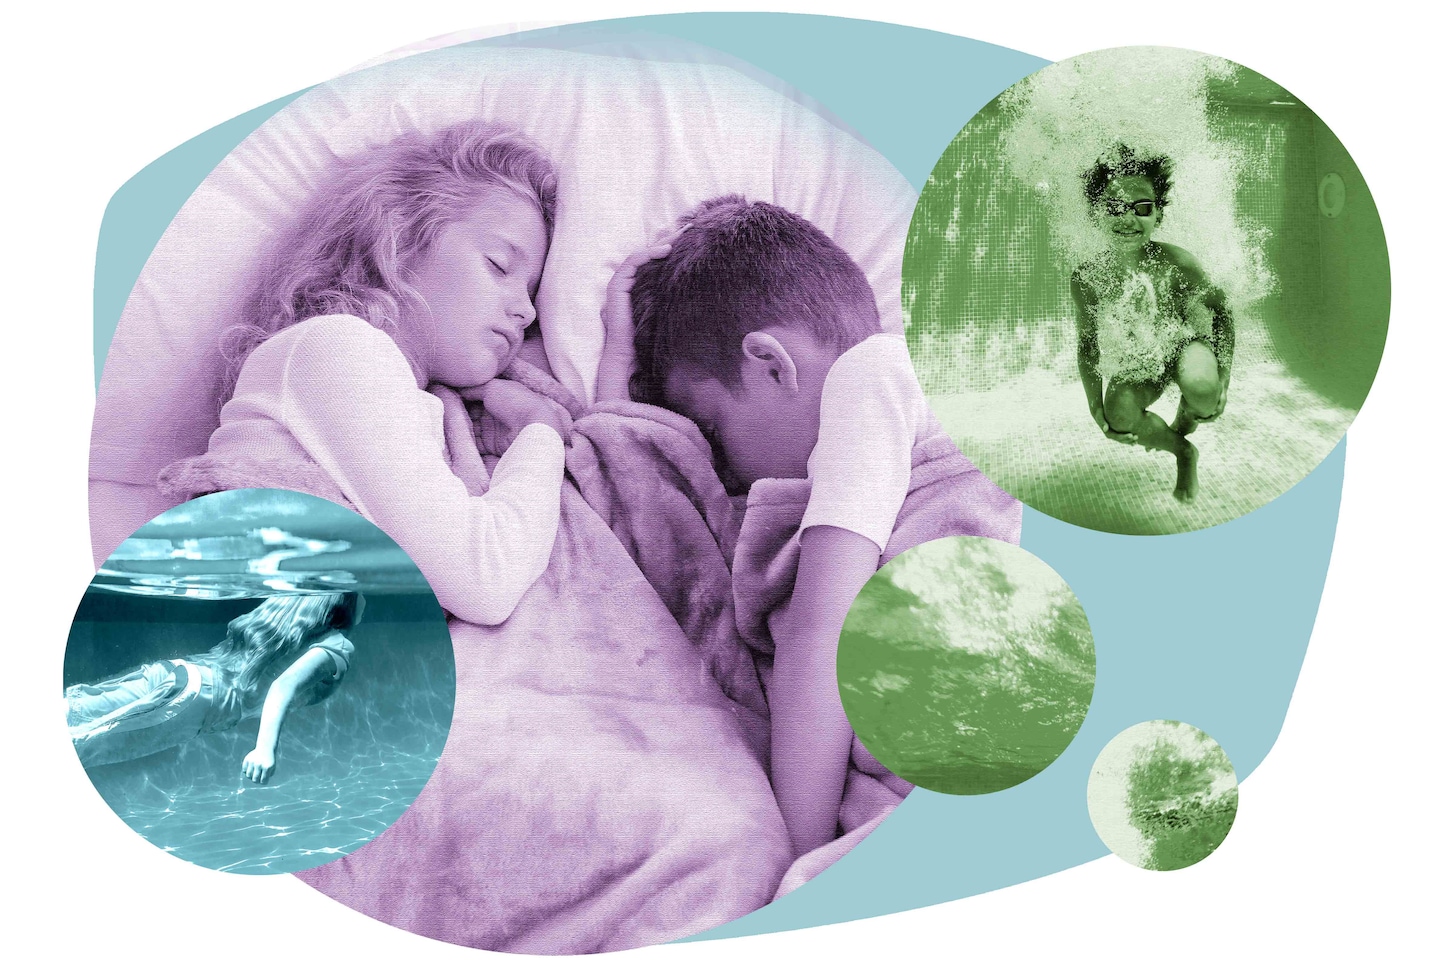 Grandma wants to know: How can she help grandchildren sleep